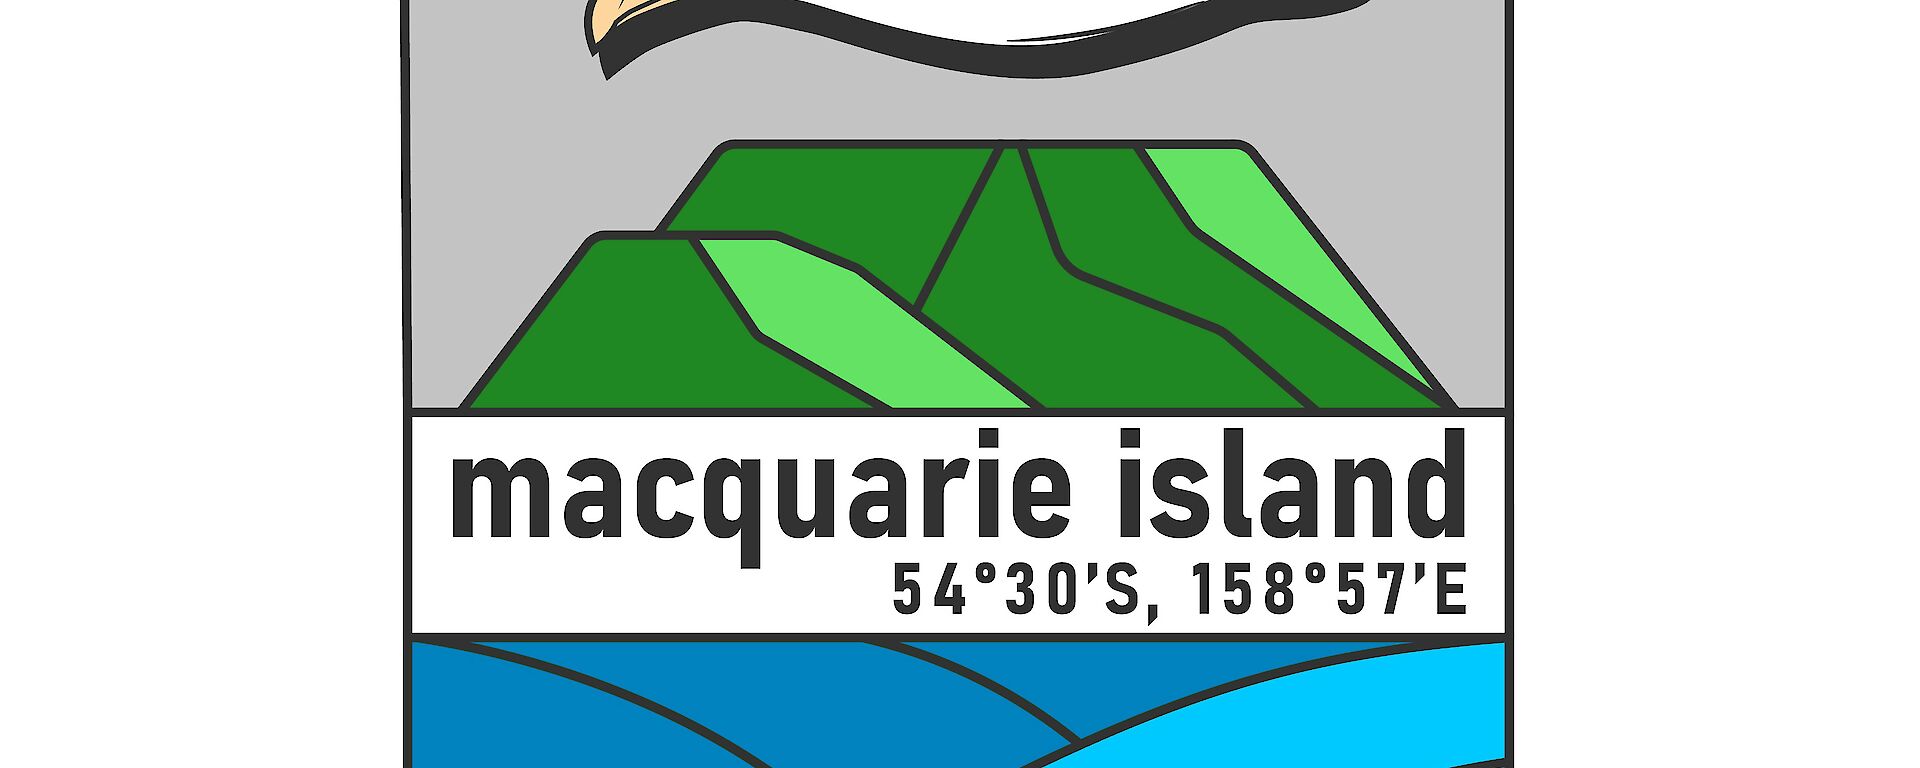 A logo image, showing a bird over an island.